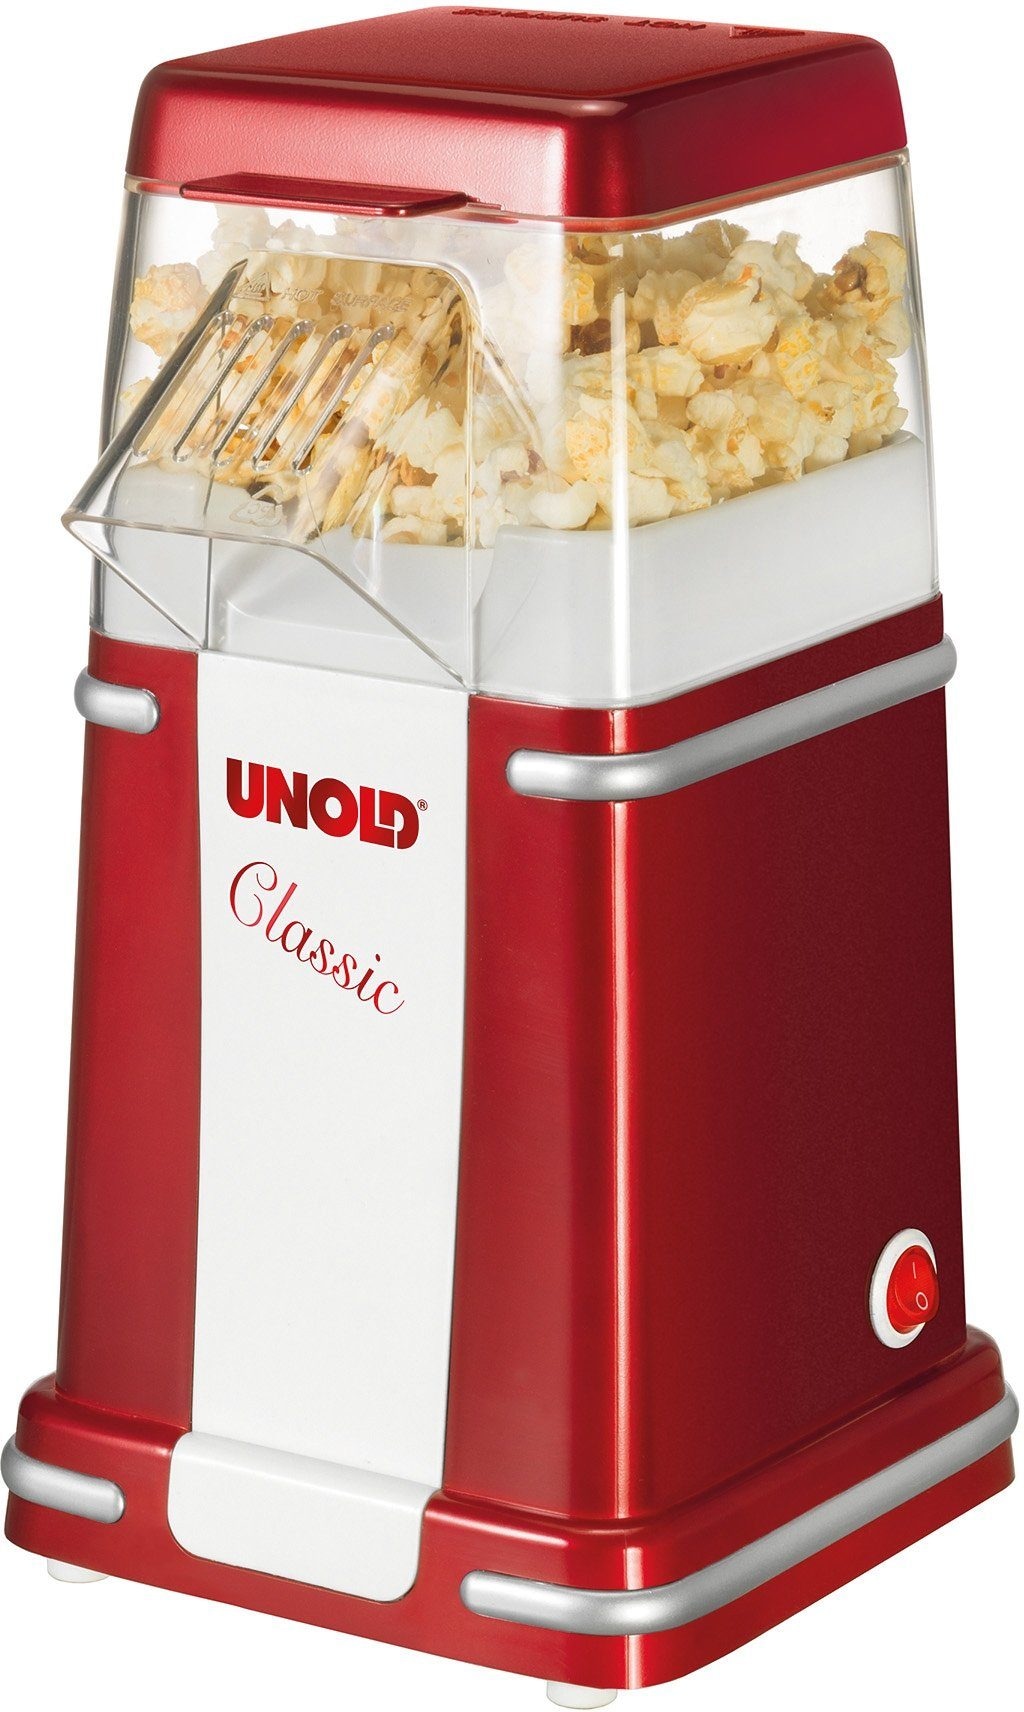 Unold Popcornmaschine »Classic«